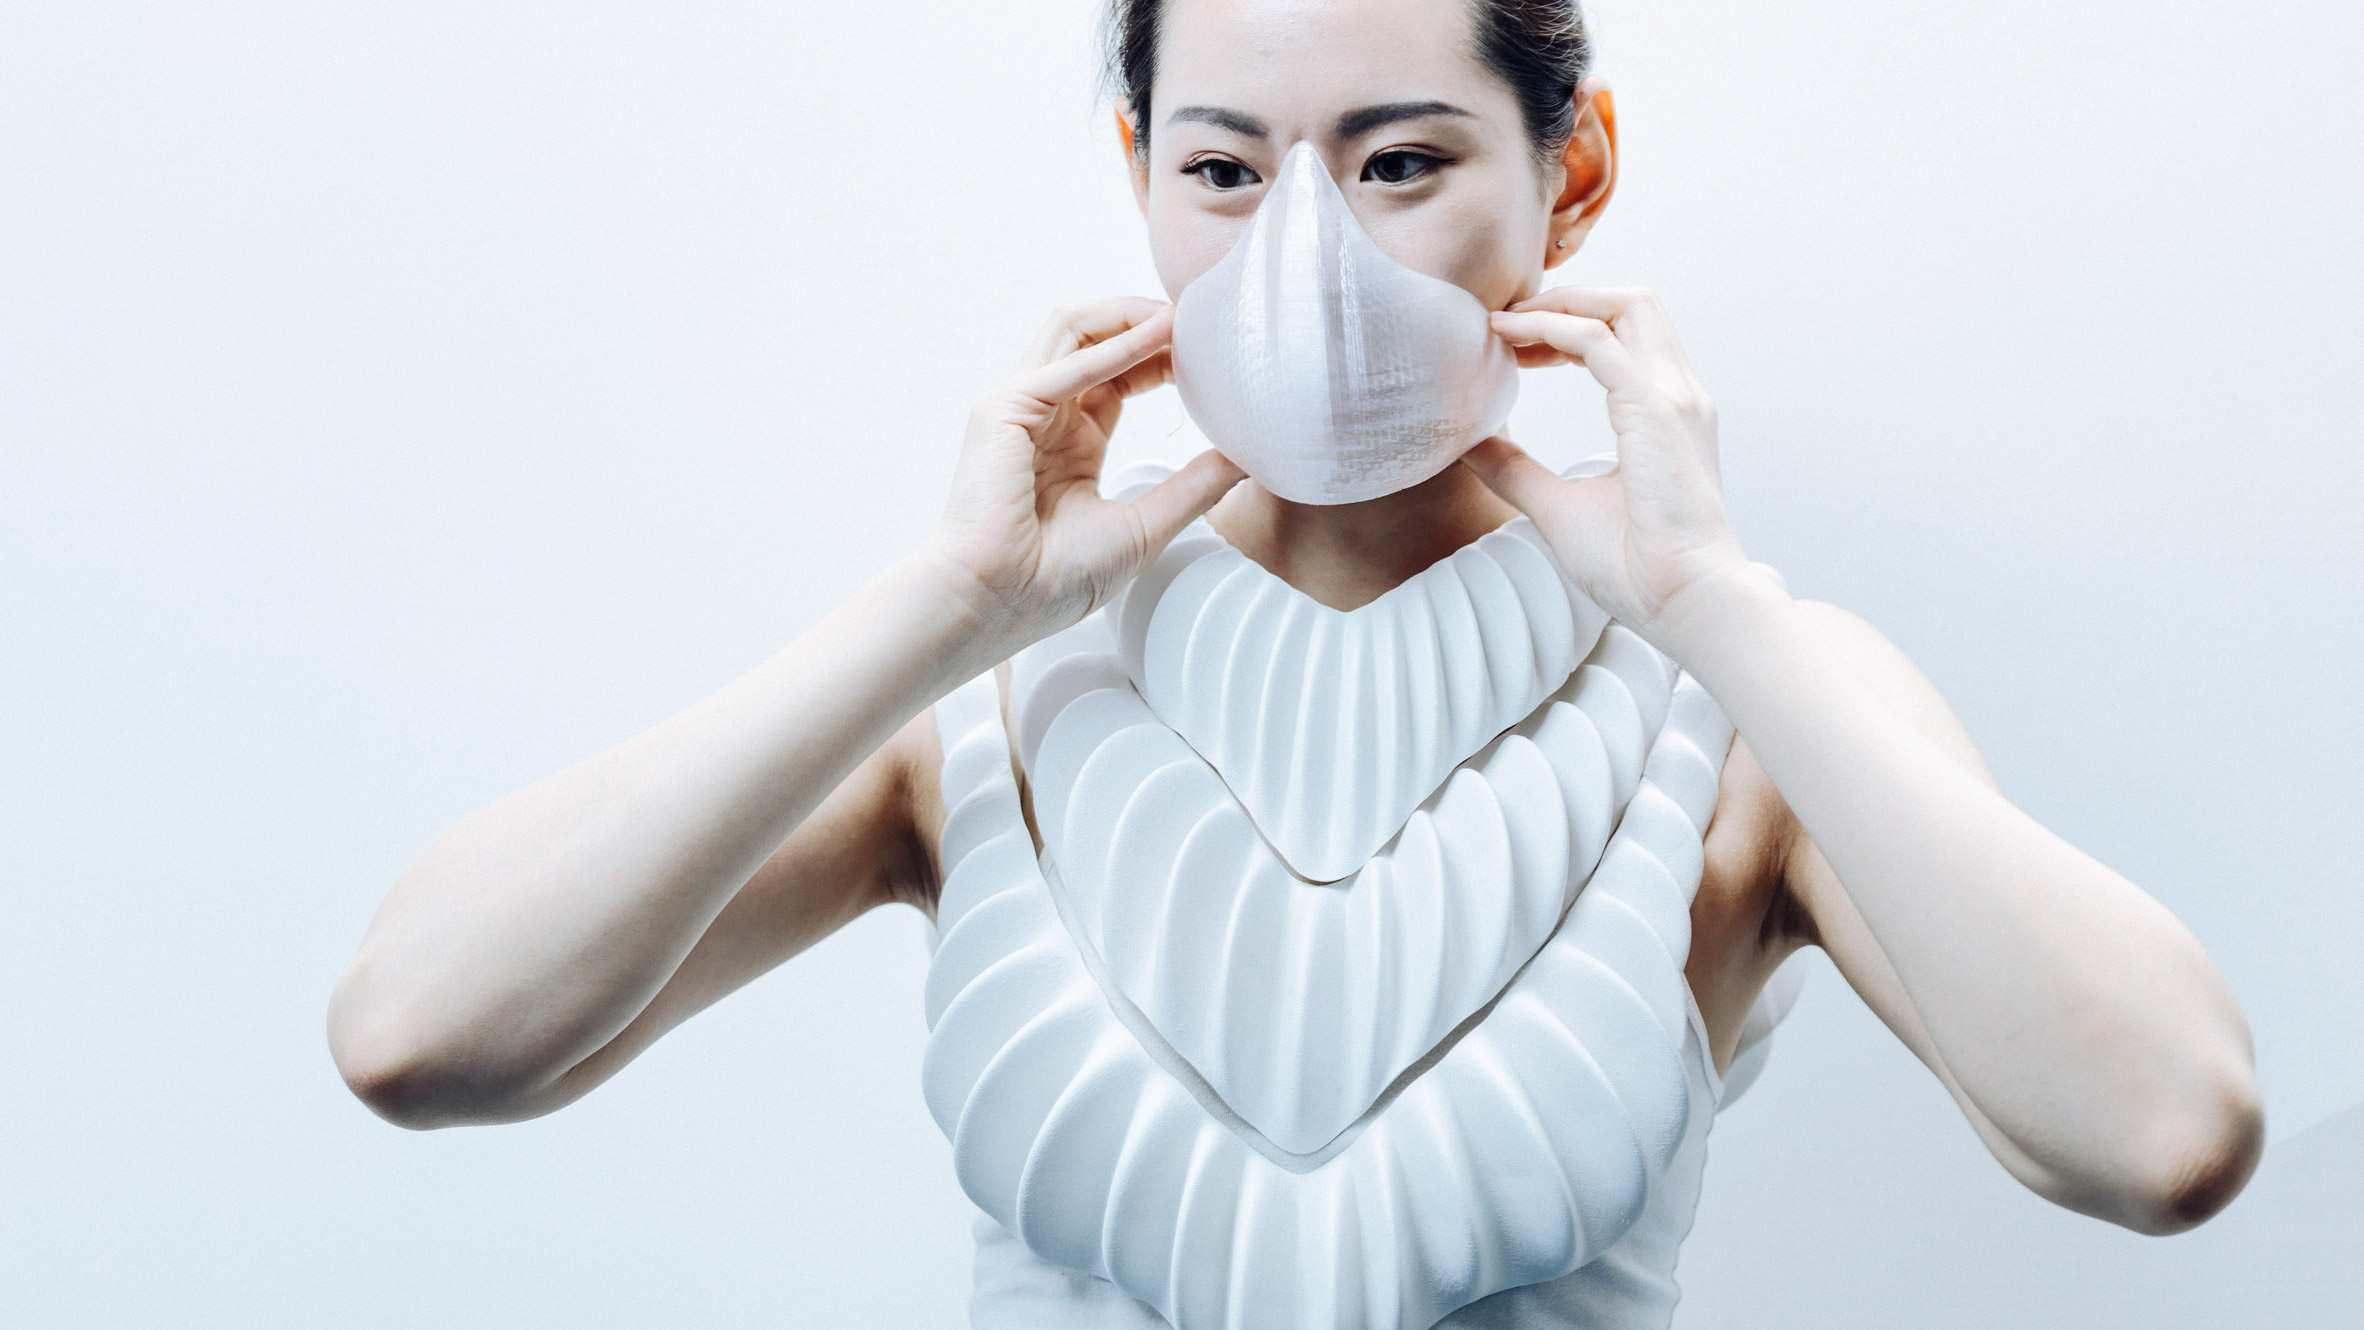 Jun Kamei's amphibious garment could enable humans to breathe underwater